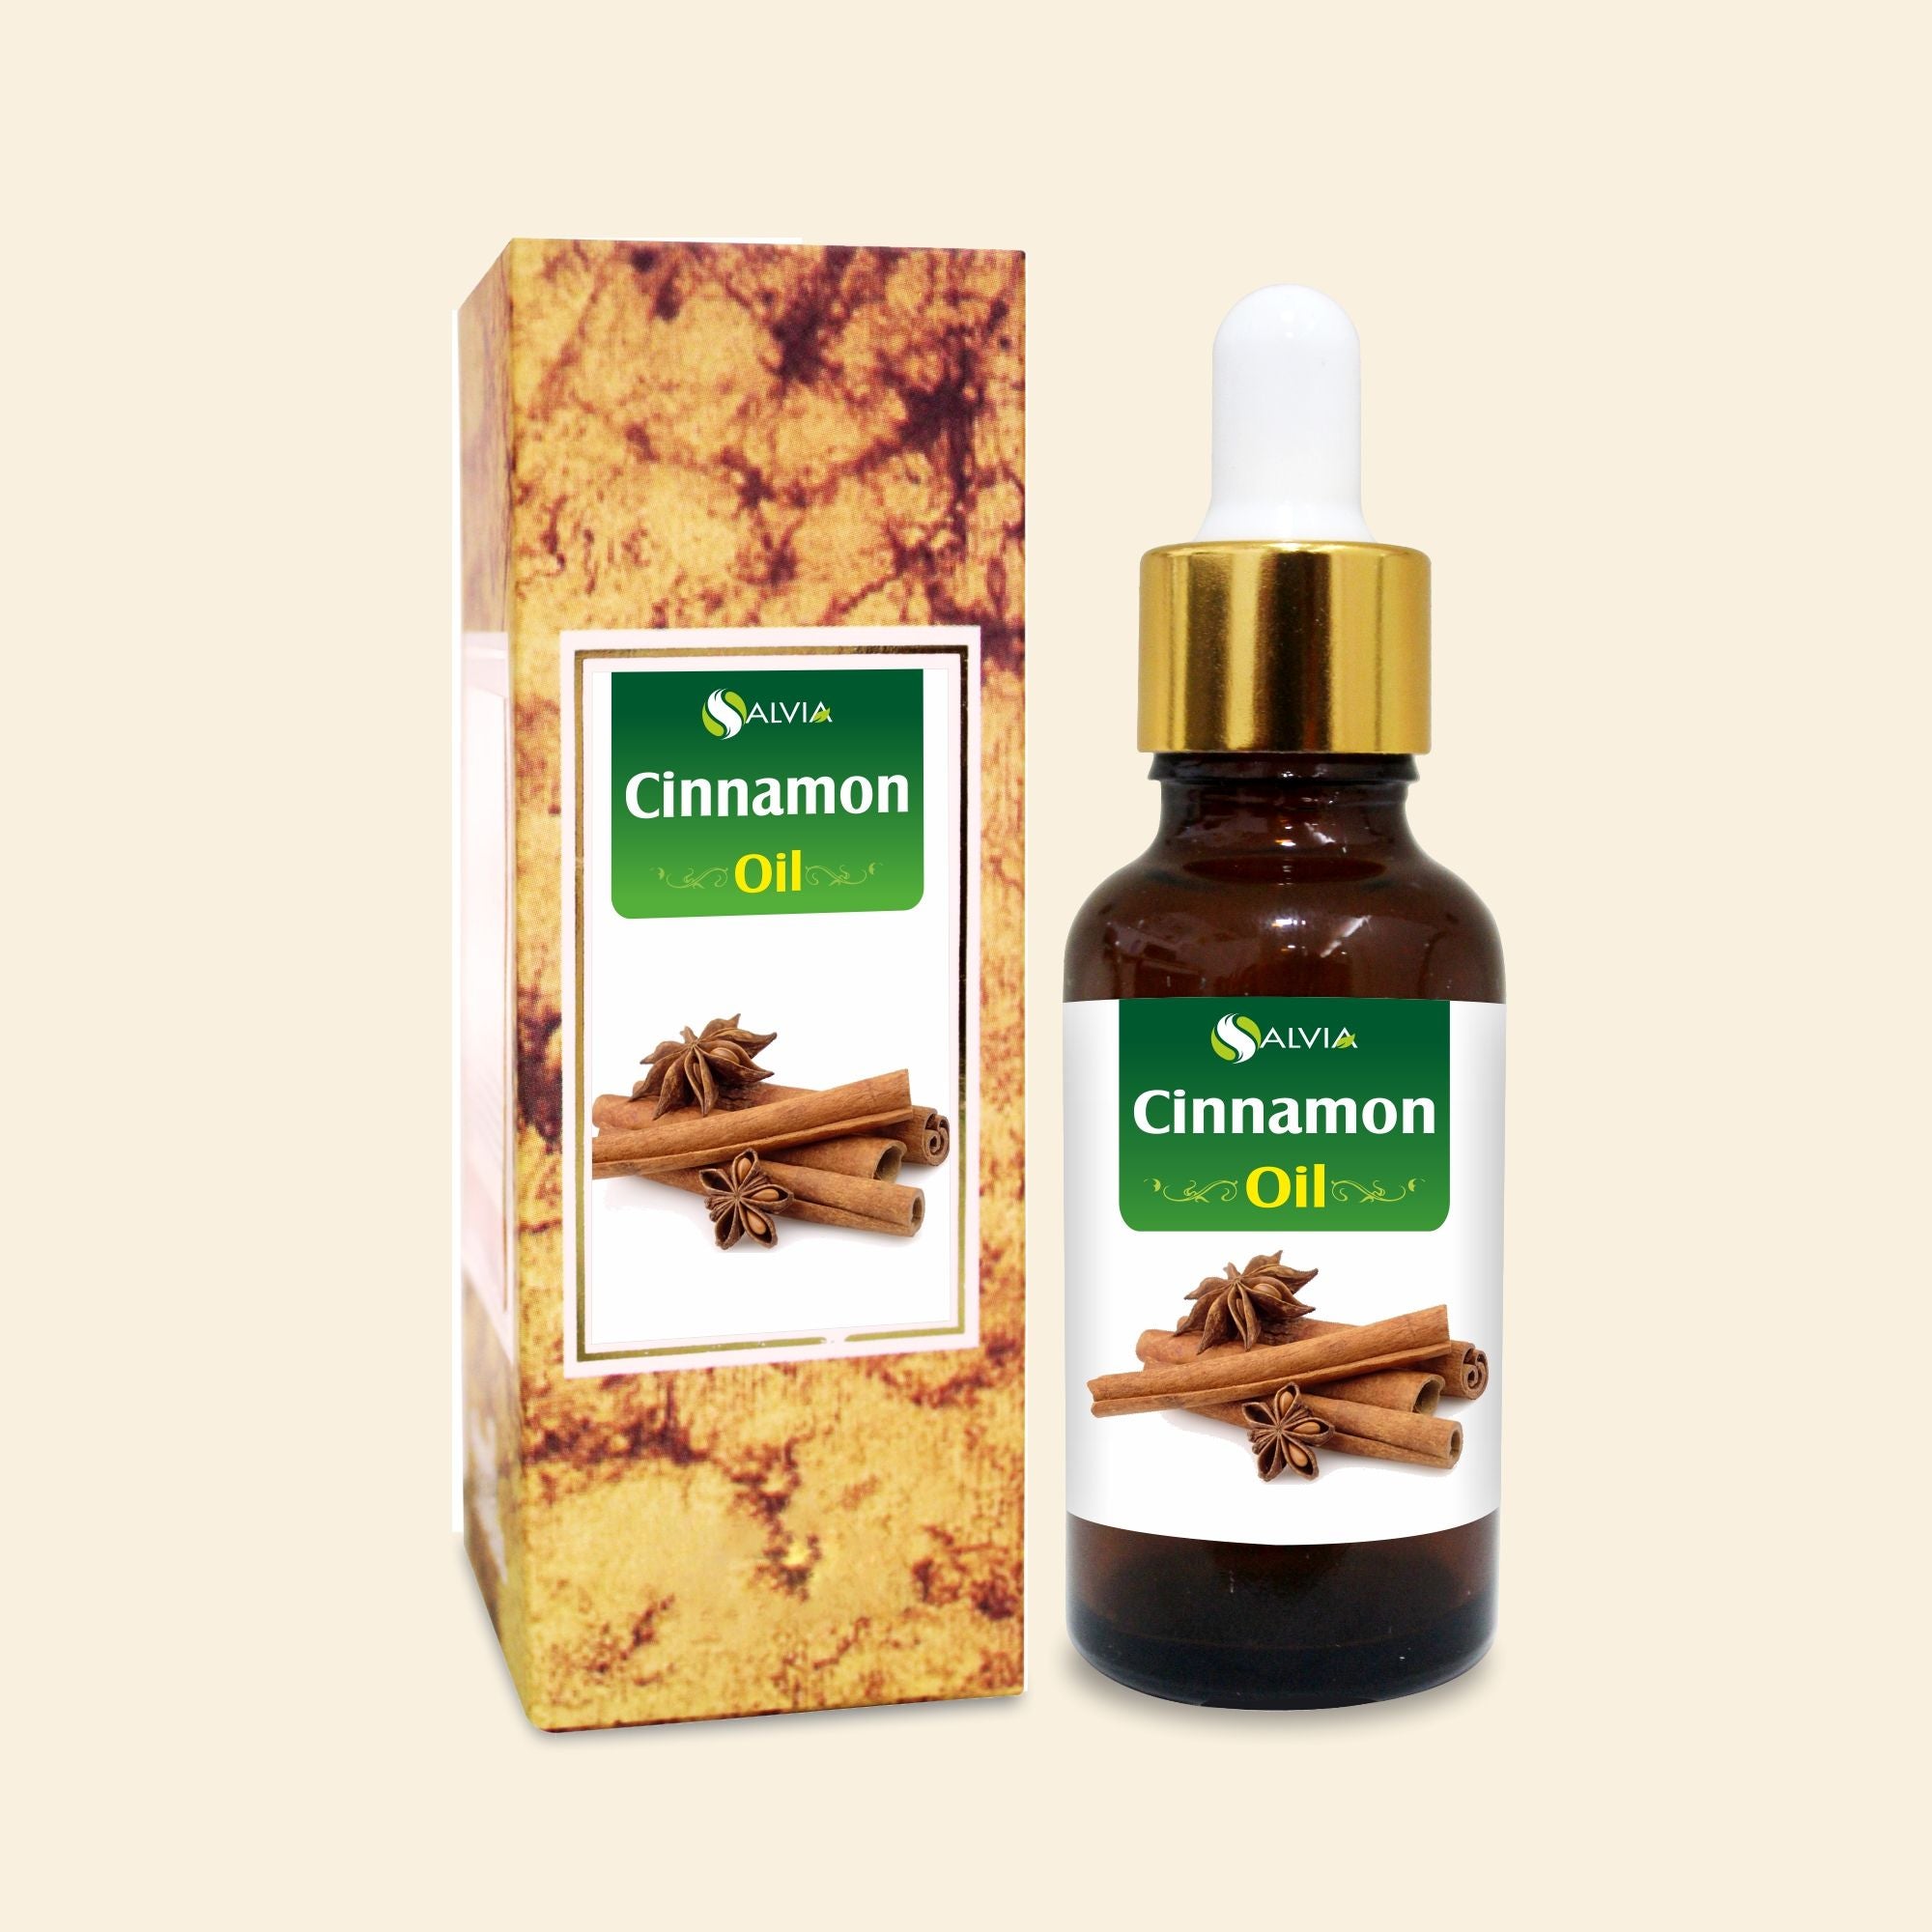 Salvia Natural Essential Oils Cinnamon Oil (Cinnamomum verum) 100% Natural Pure Essential Oil